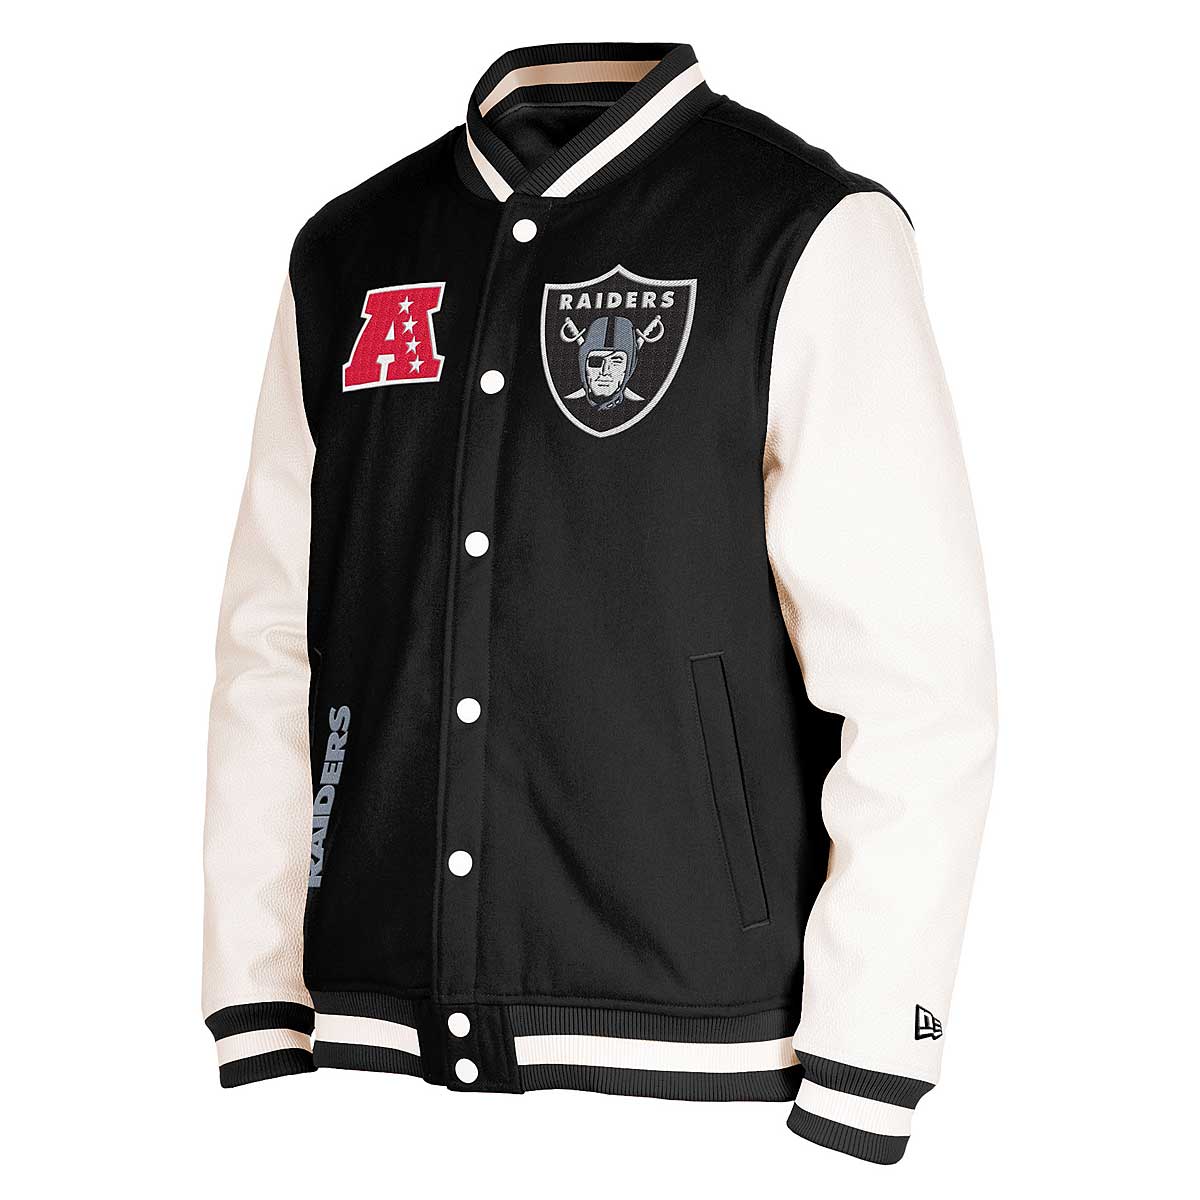 Las Vegas Raiders Throwback Jacket - Size: XXL, NFL by New Era